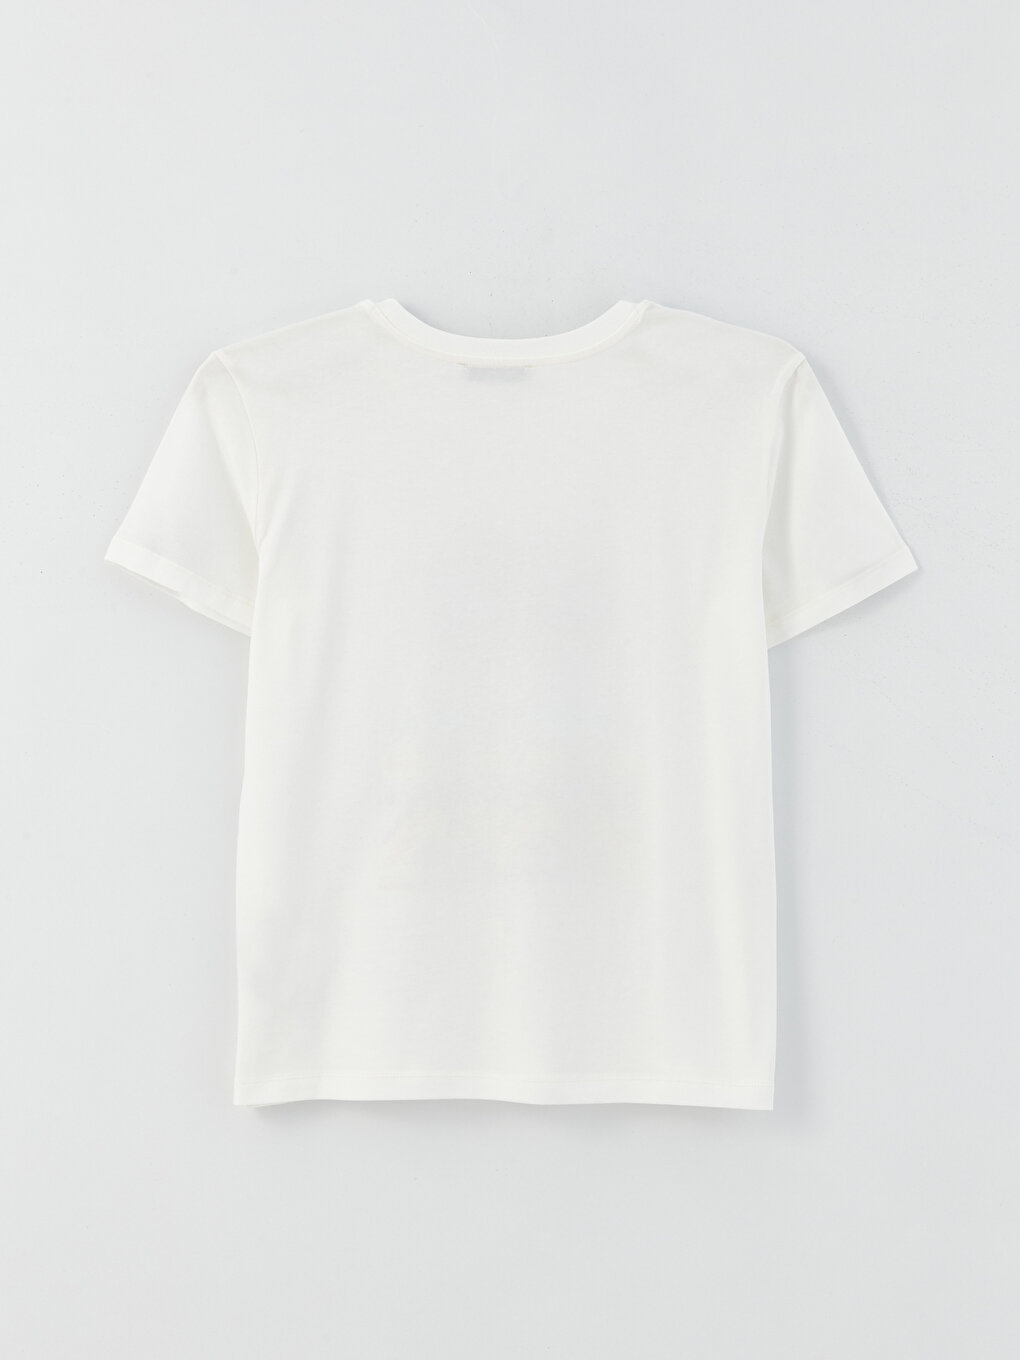 Crew Neck Printed Short Sleeve Women's T-shirt -S3GU30Z8-R9J - S3GU30Z8 ...